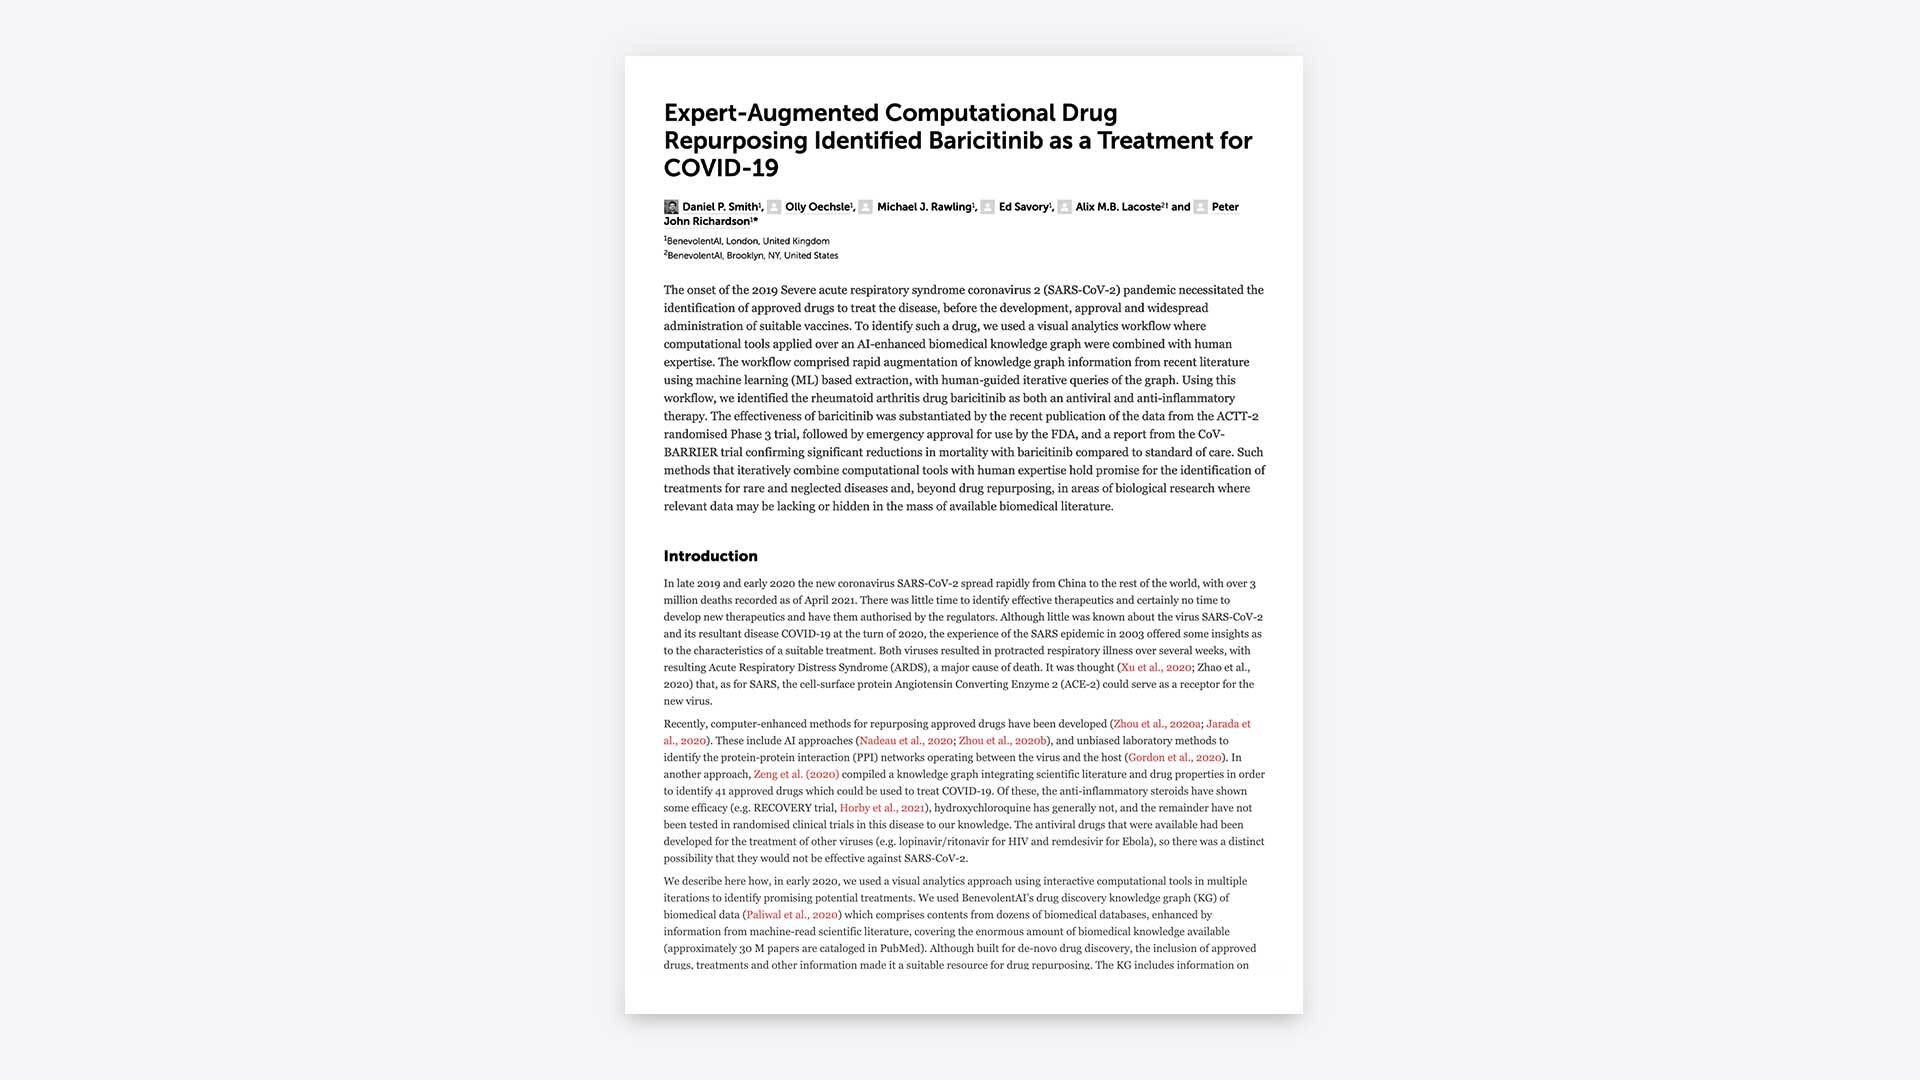 Expert-Augmented_Computational_Drug_Repurposing_Identified_Baricitinib_as_a_Treatment_for_COVID-19.jpg